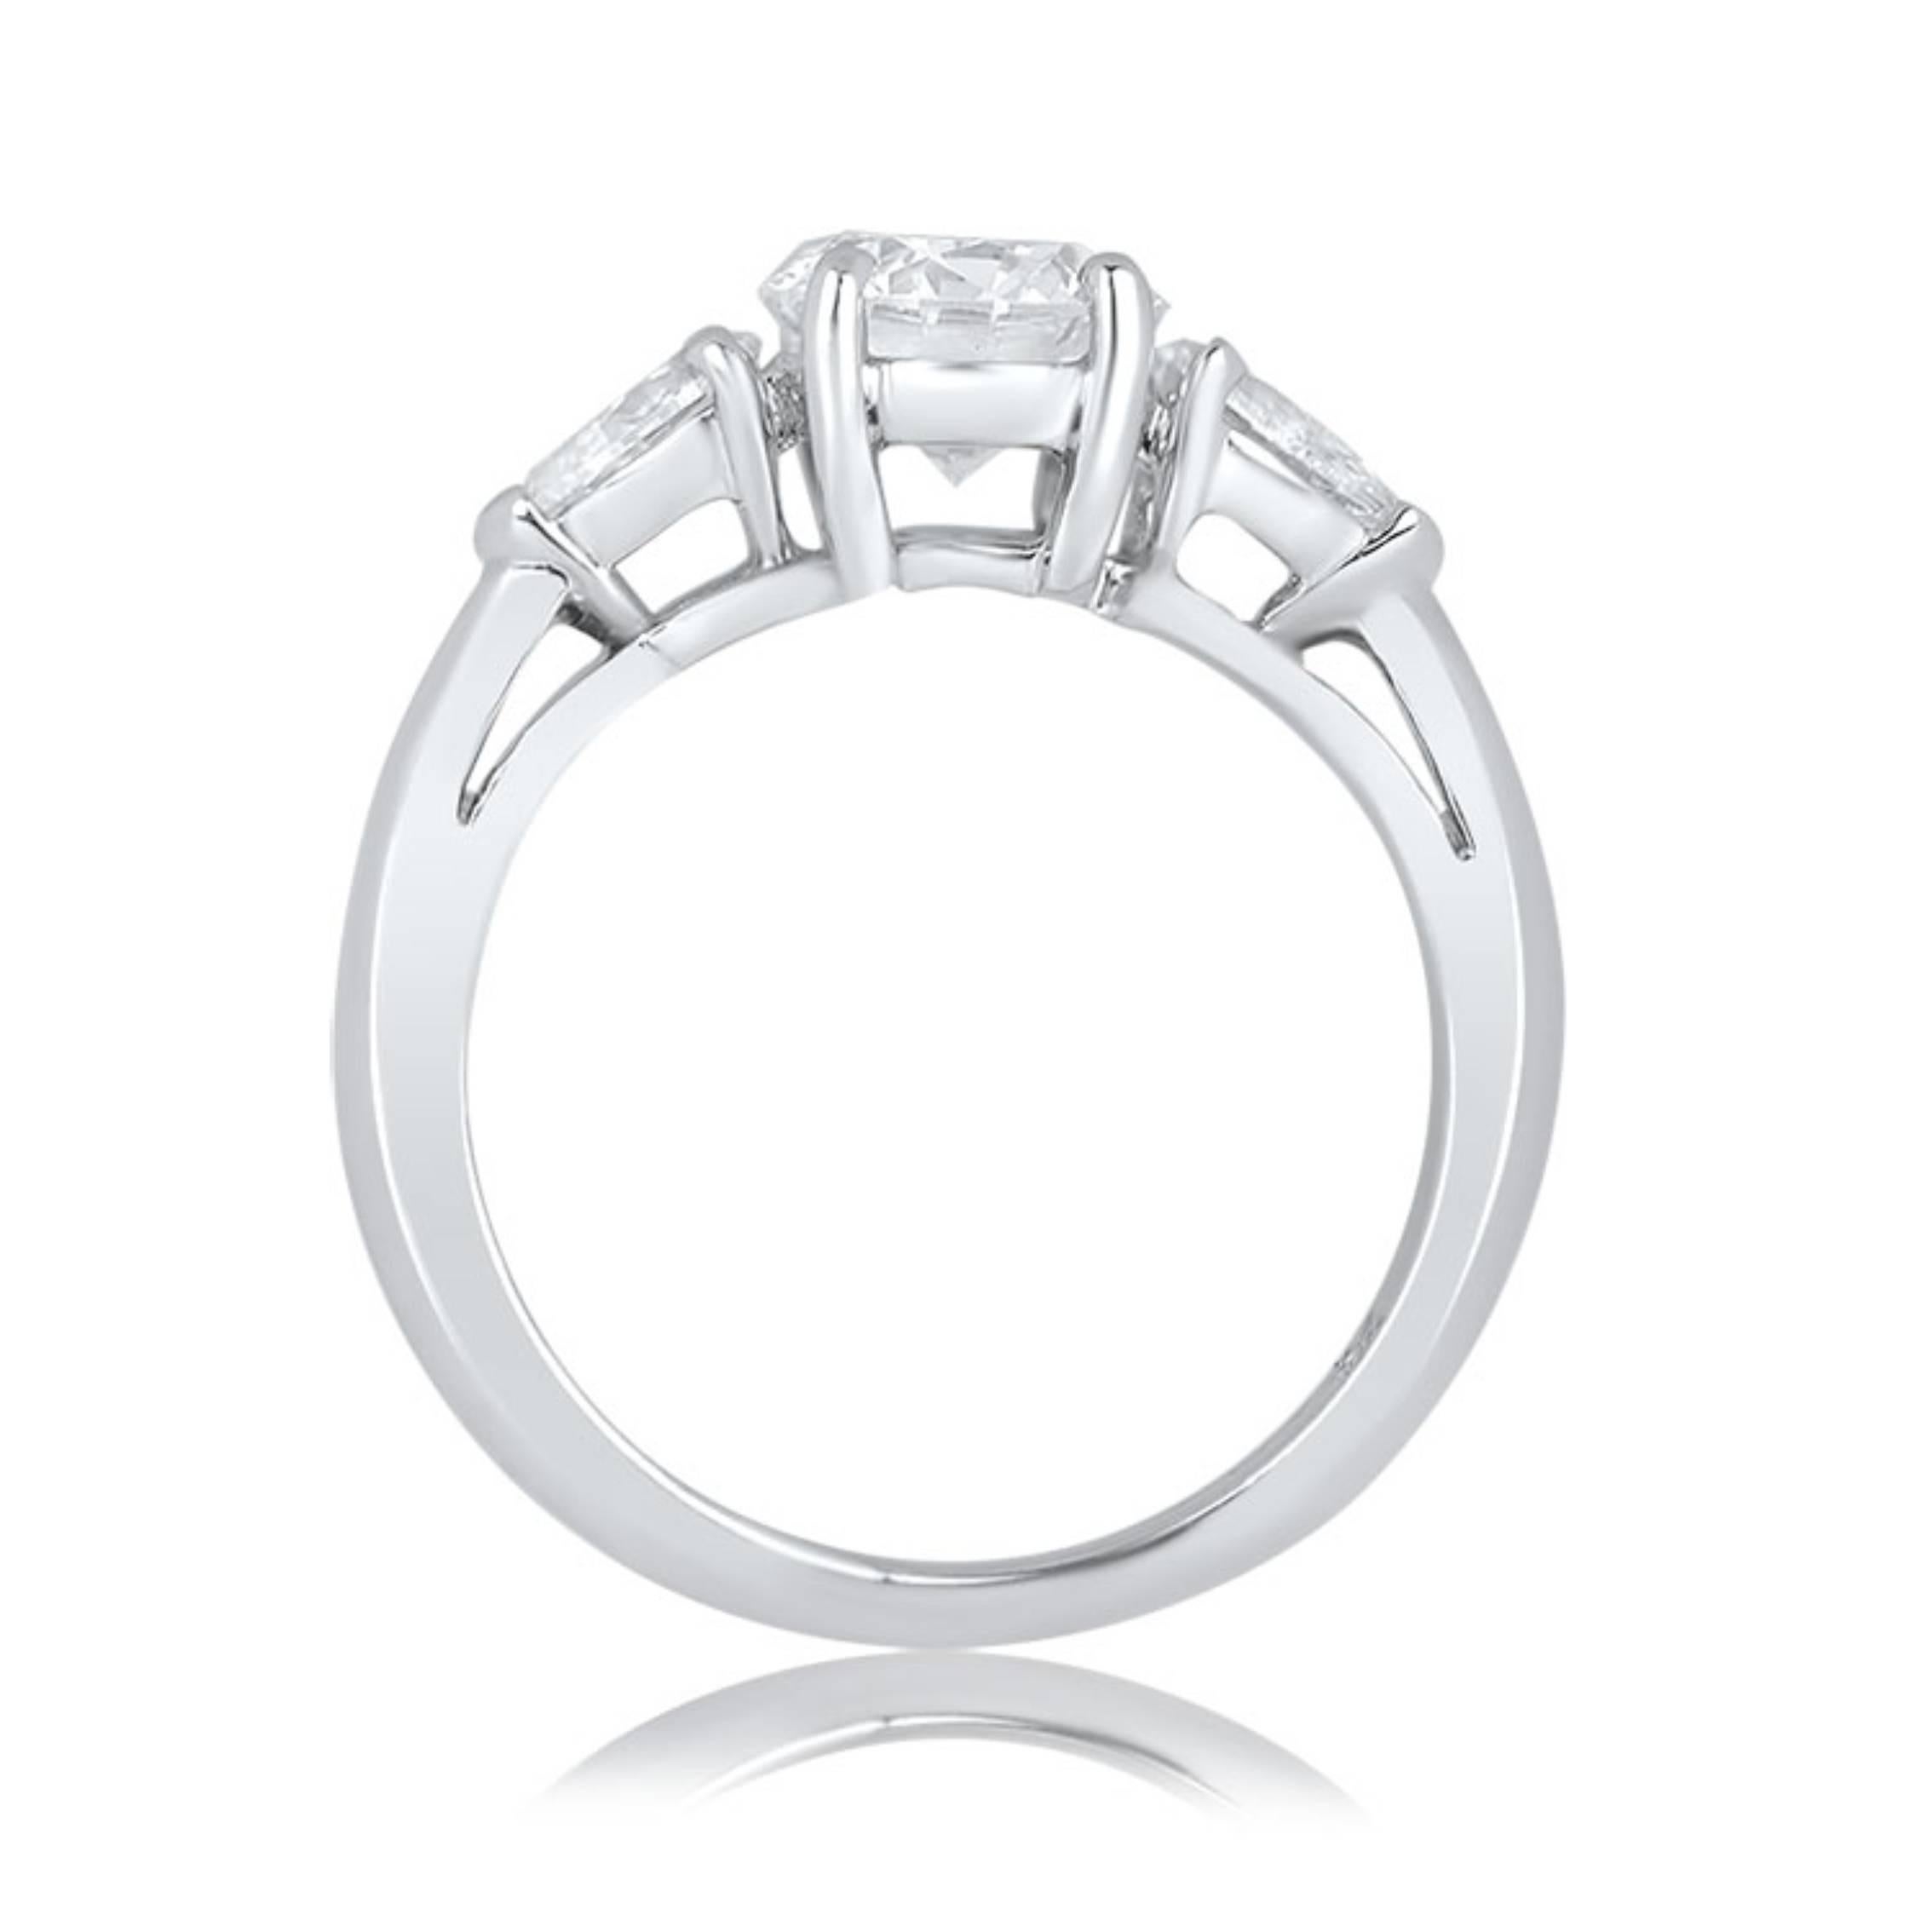 Tiffany & Co. 1.04ct Brilliant Cut Diamond Engagement Ring, G Color, Platinum 1